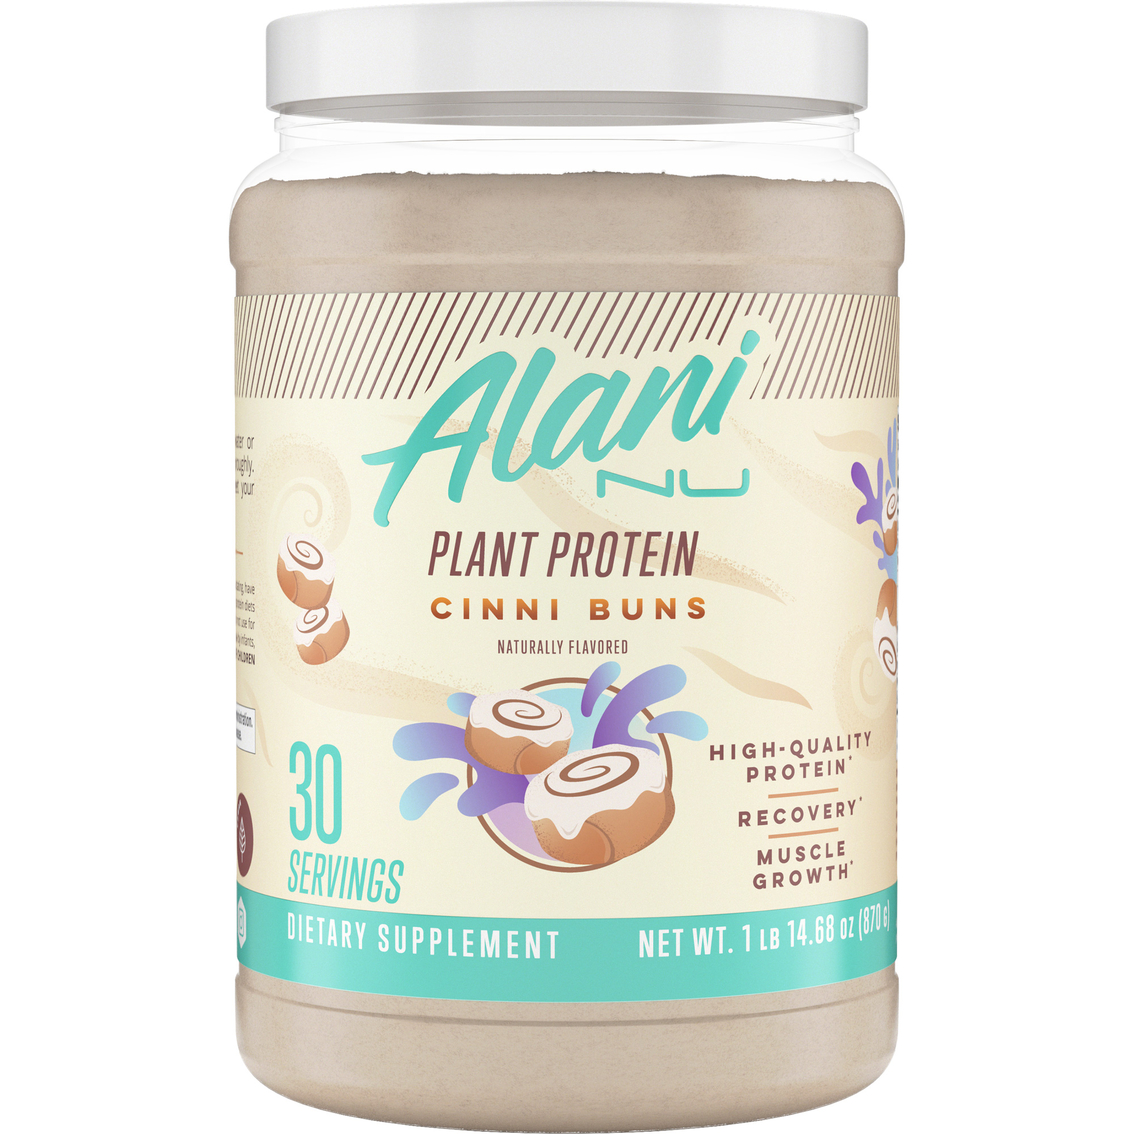 Alani Nu Plant Protein 2 lb. - Image 1 of 2